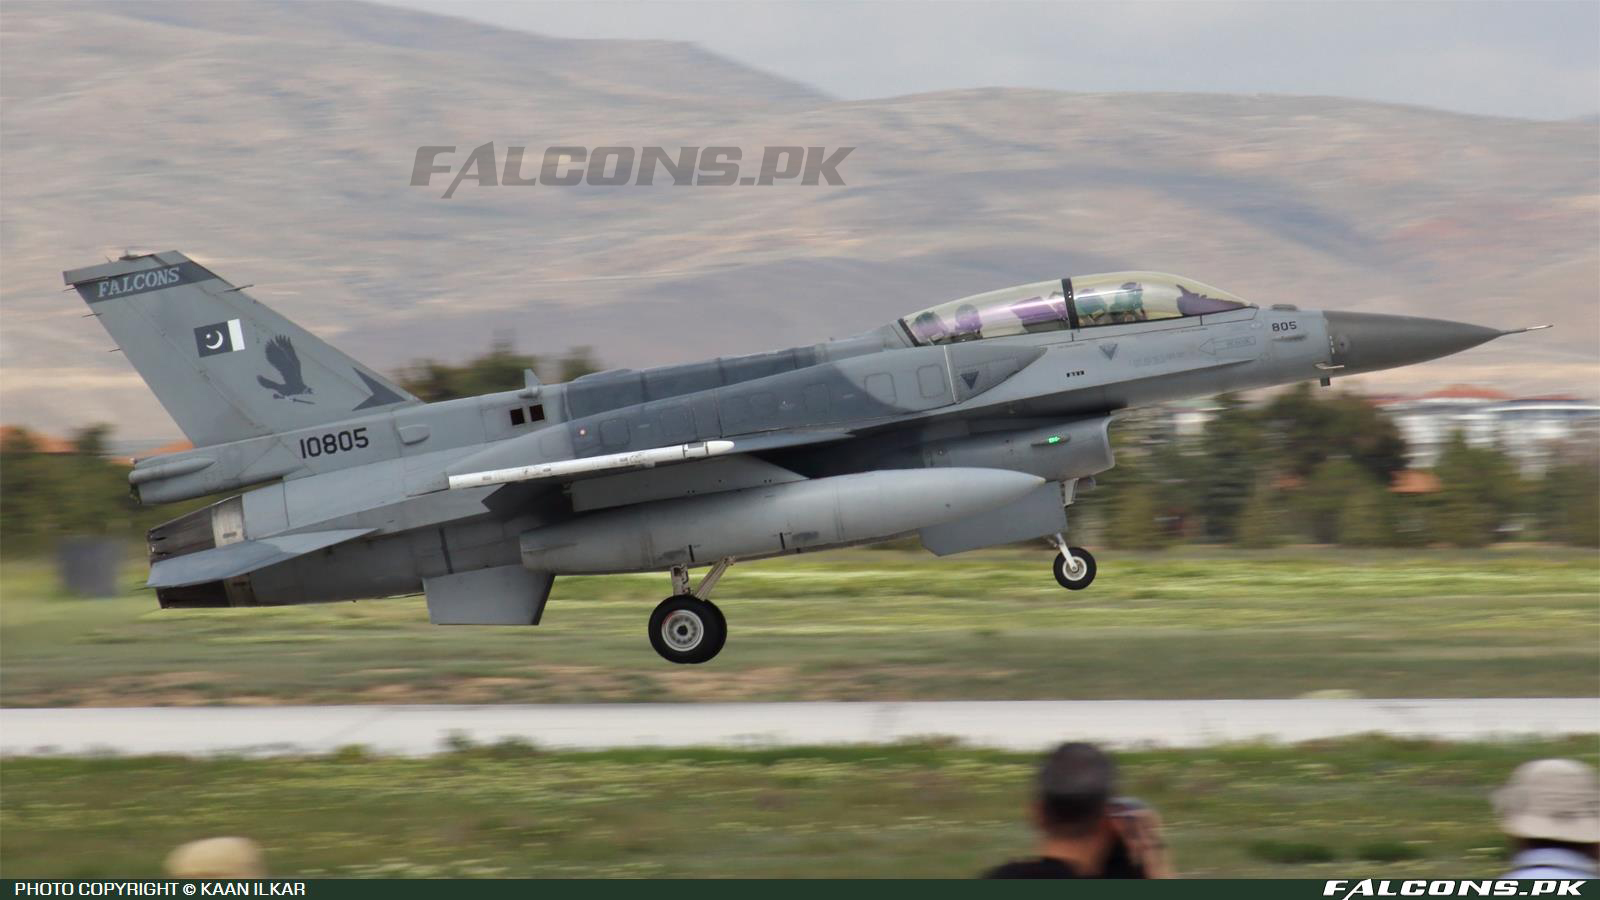 Pakistan Air Force (PAF) Lockheed Martin F-16D Fighting Falcon, Reg: 10805 - Photo by Kaan ILKAR